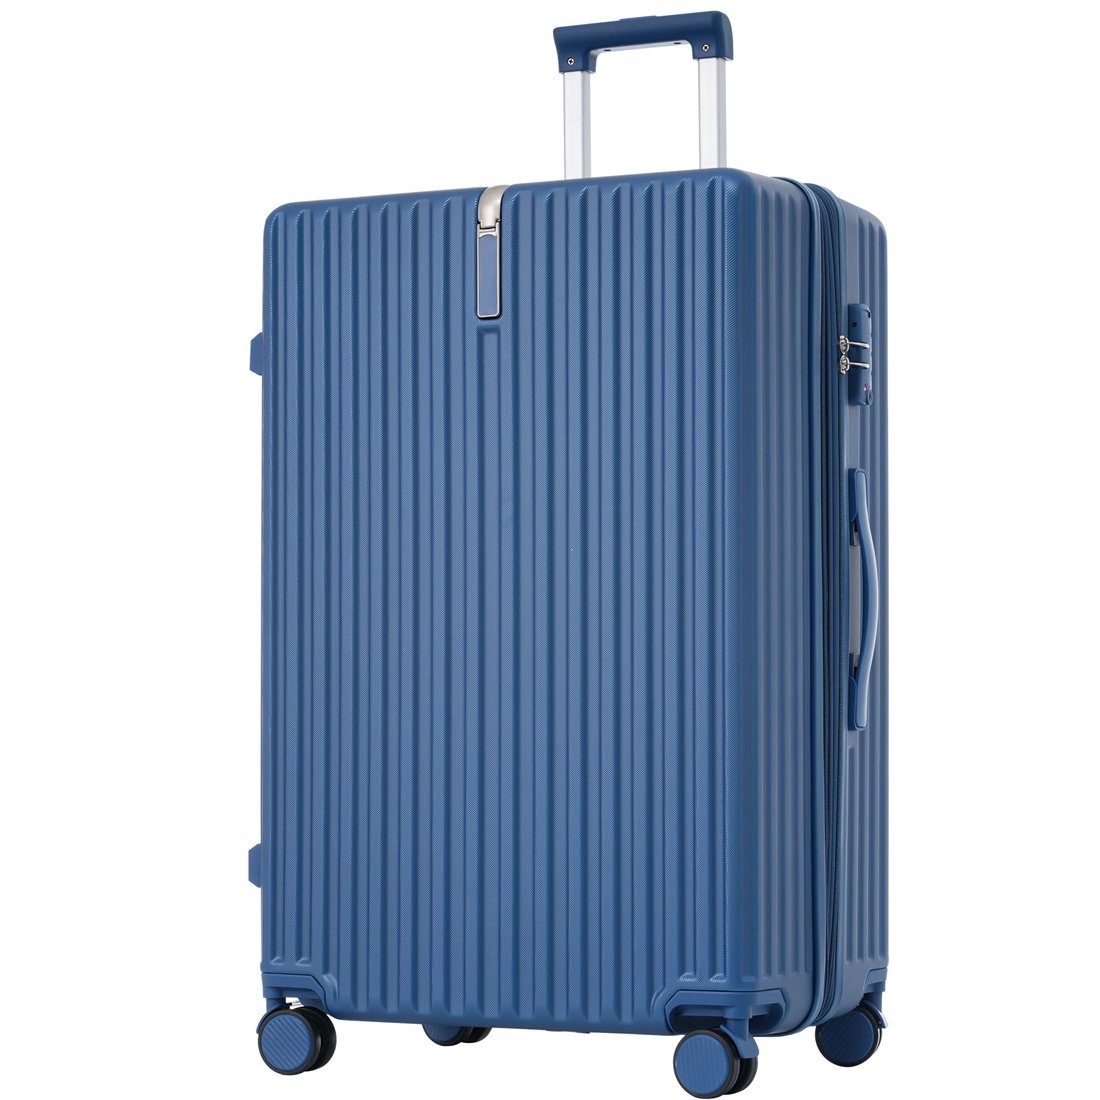 DÖRÖY Koffer Hartschalen-Koffer,Rollkoffer,Reisekoffer,65*43*28cm, blau